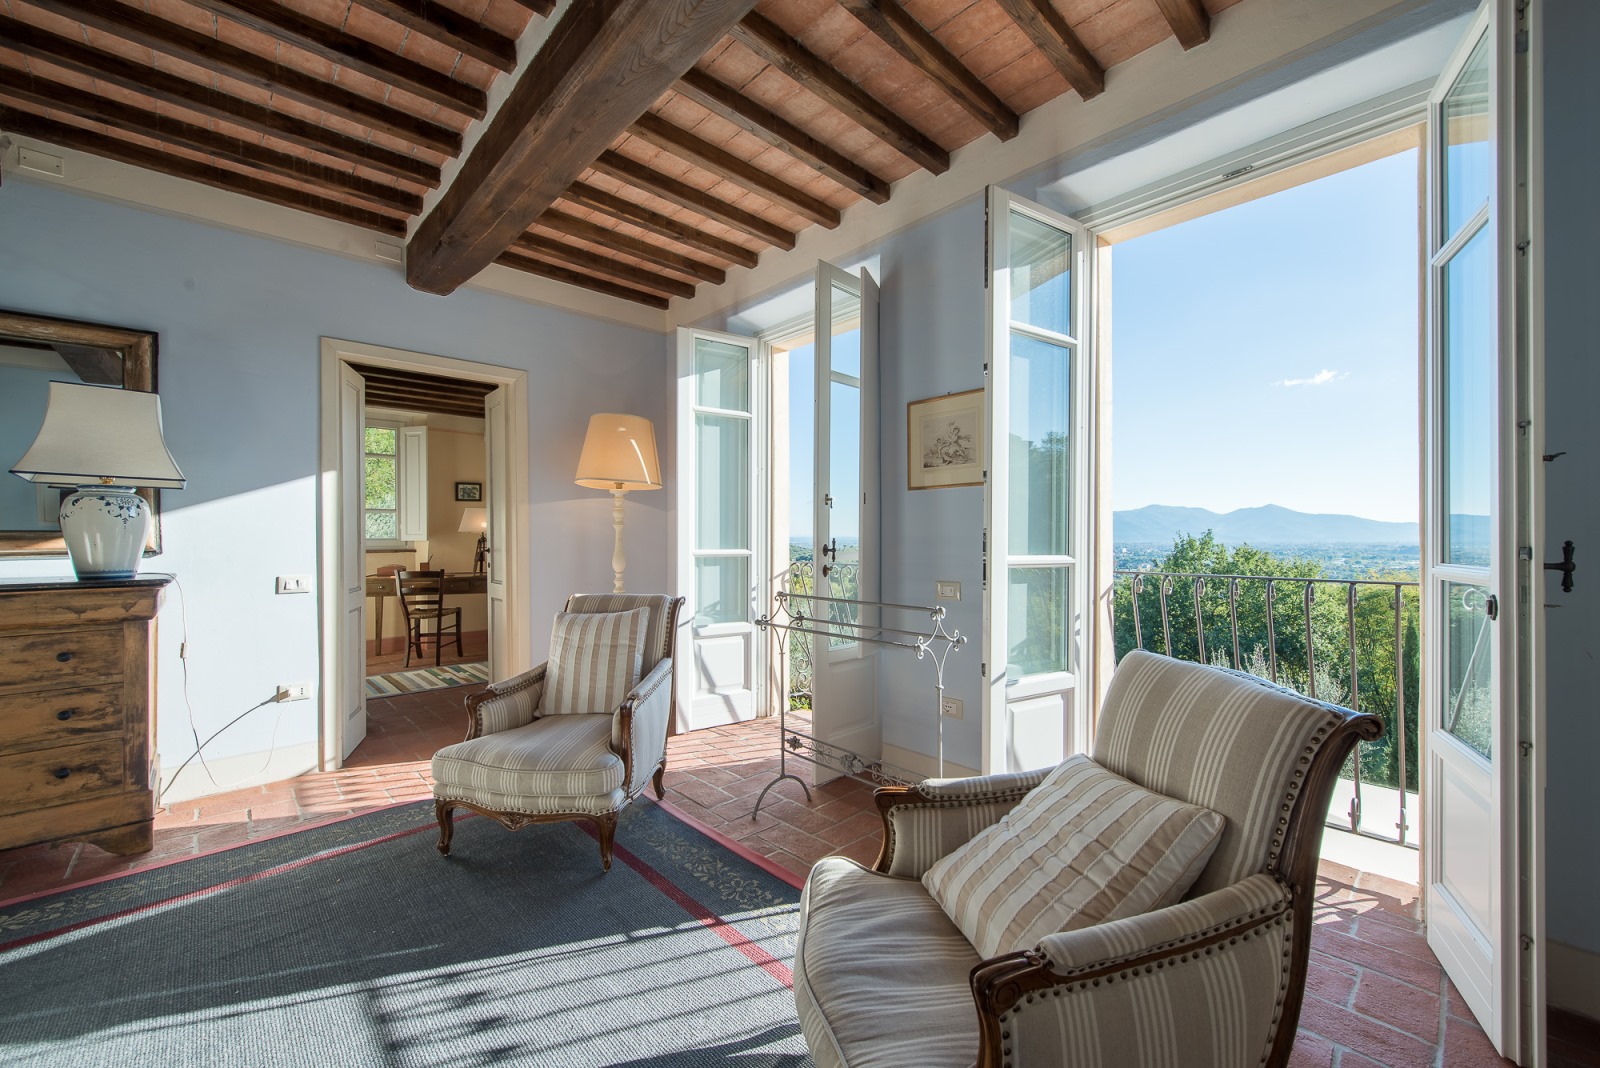 views from the master bedroom in Villa Barboleta, Tuscany